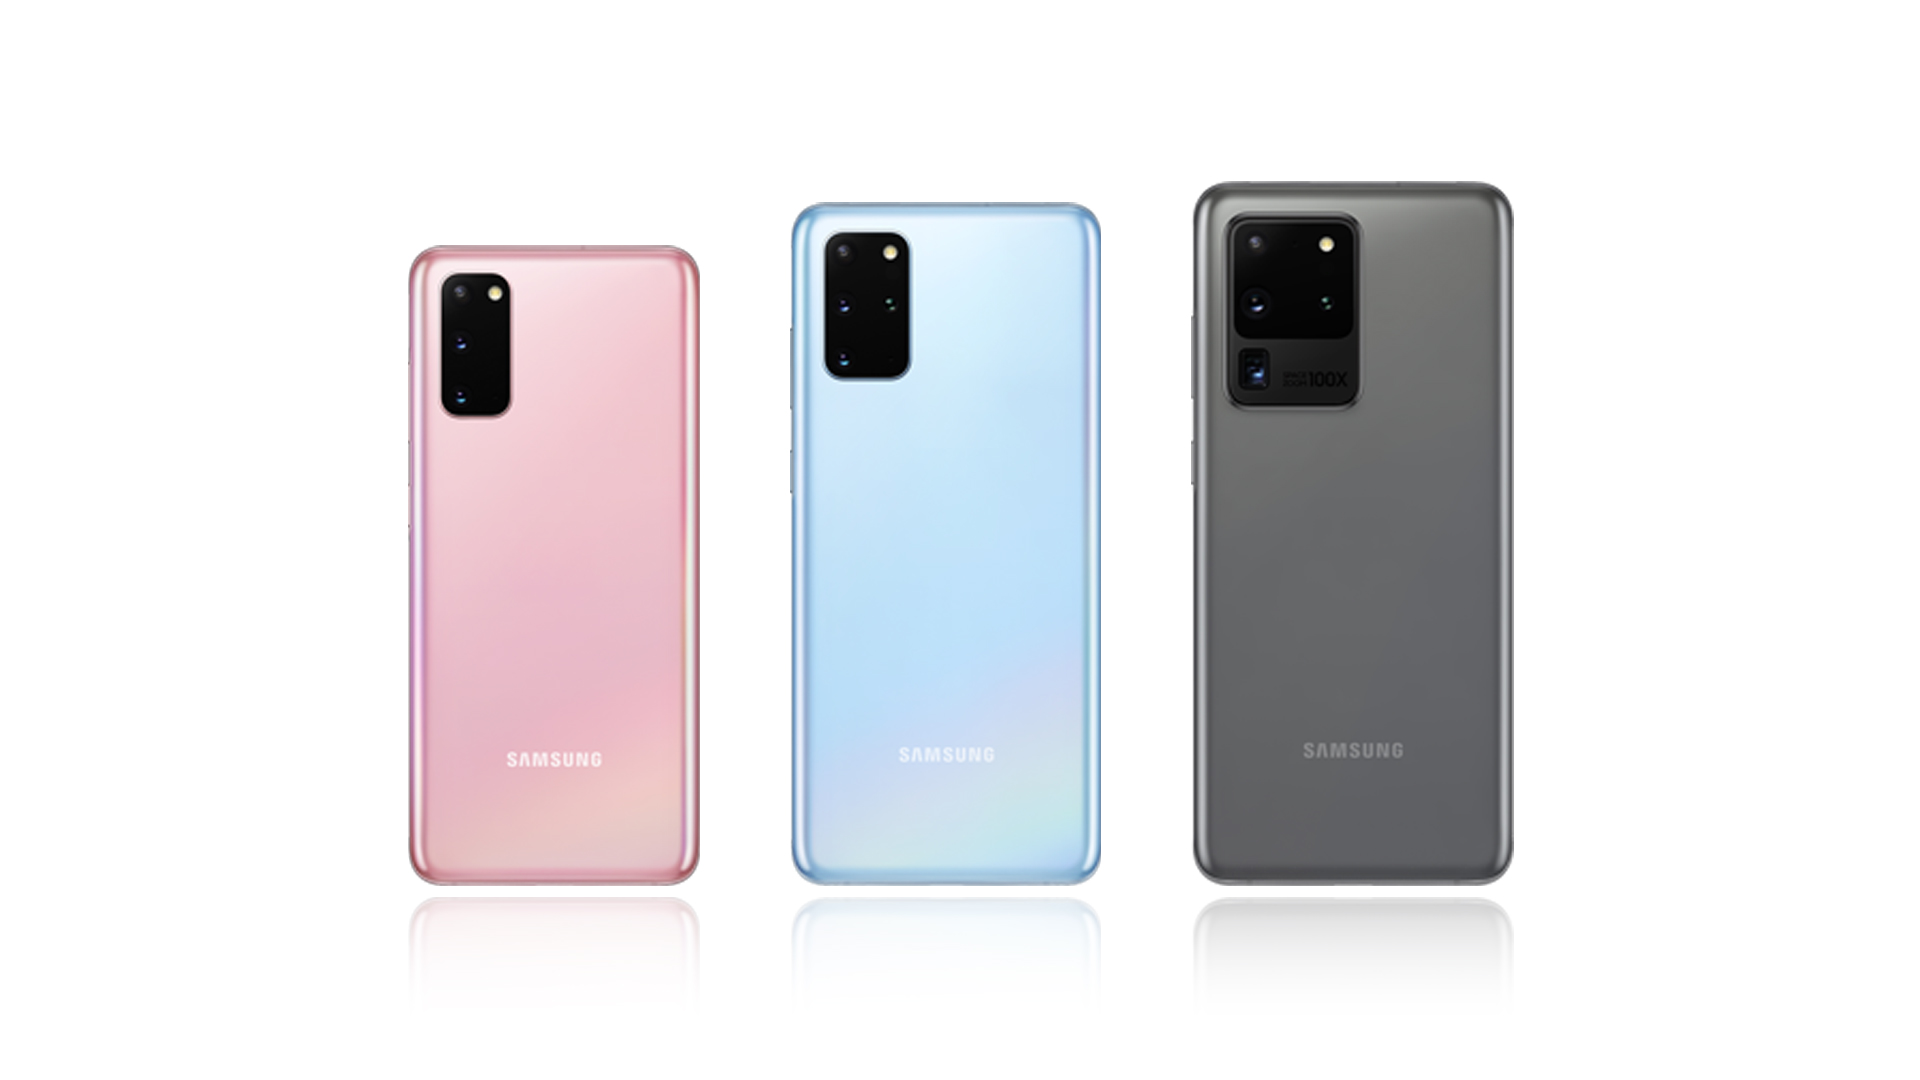 Samsung Galaxy S20 Ultra Introduction 